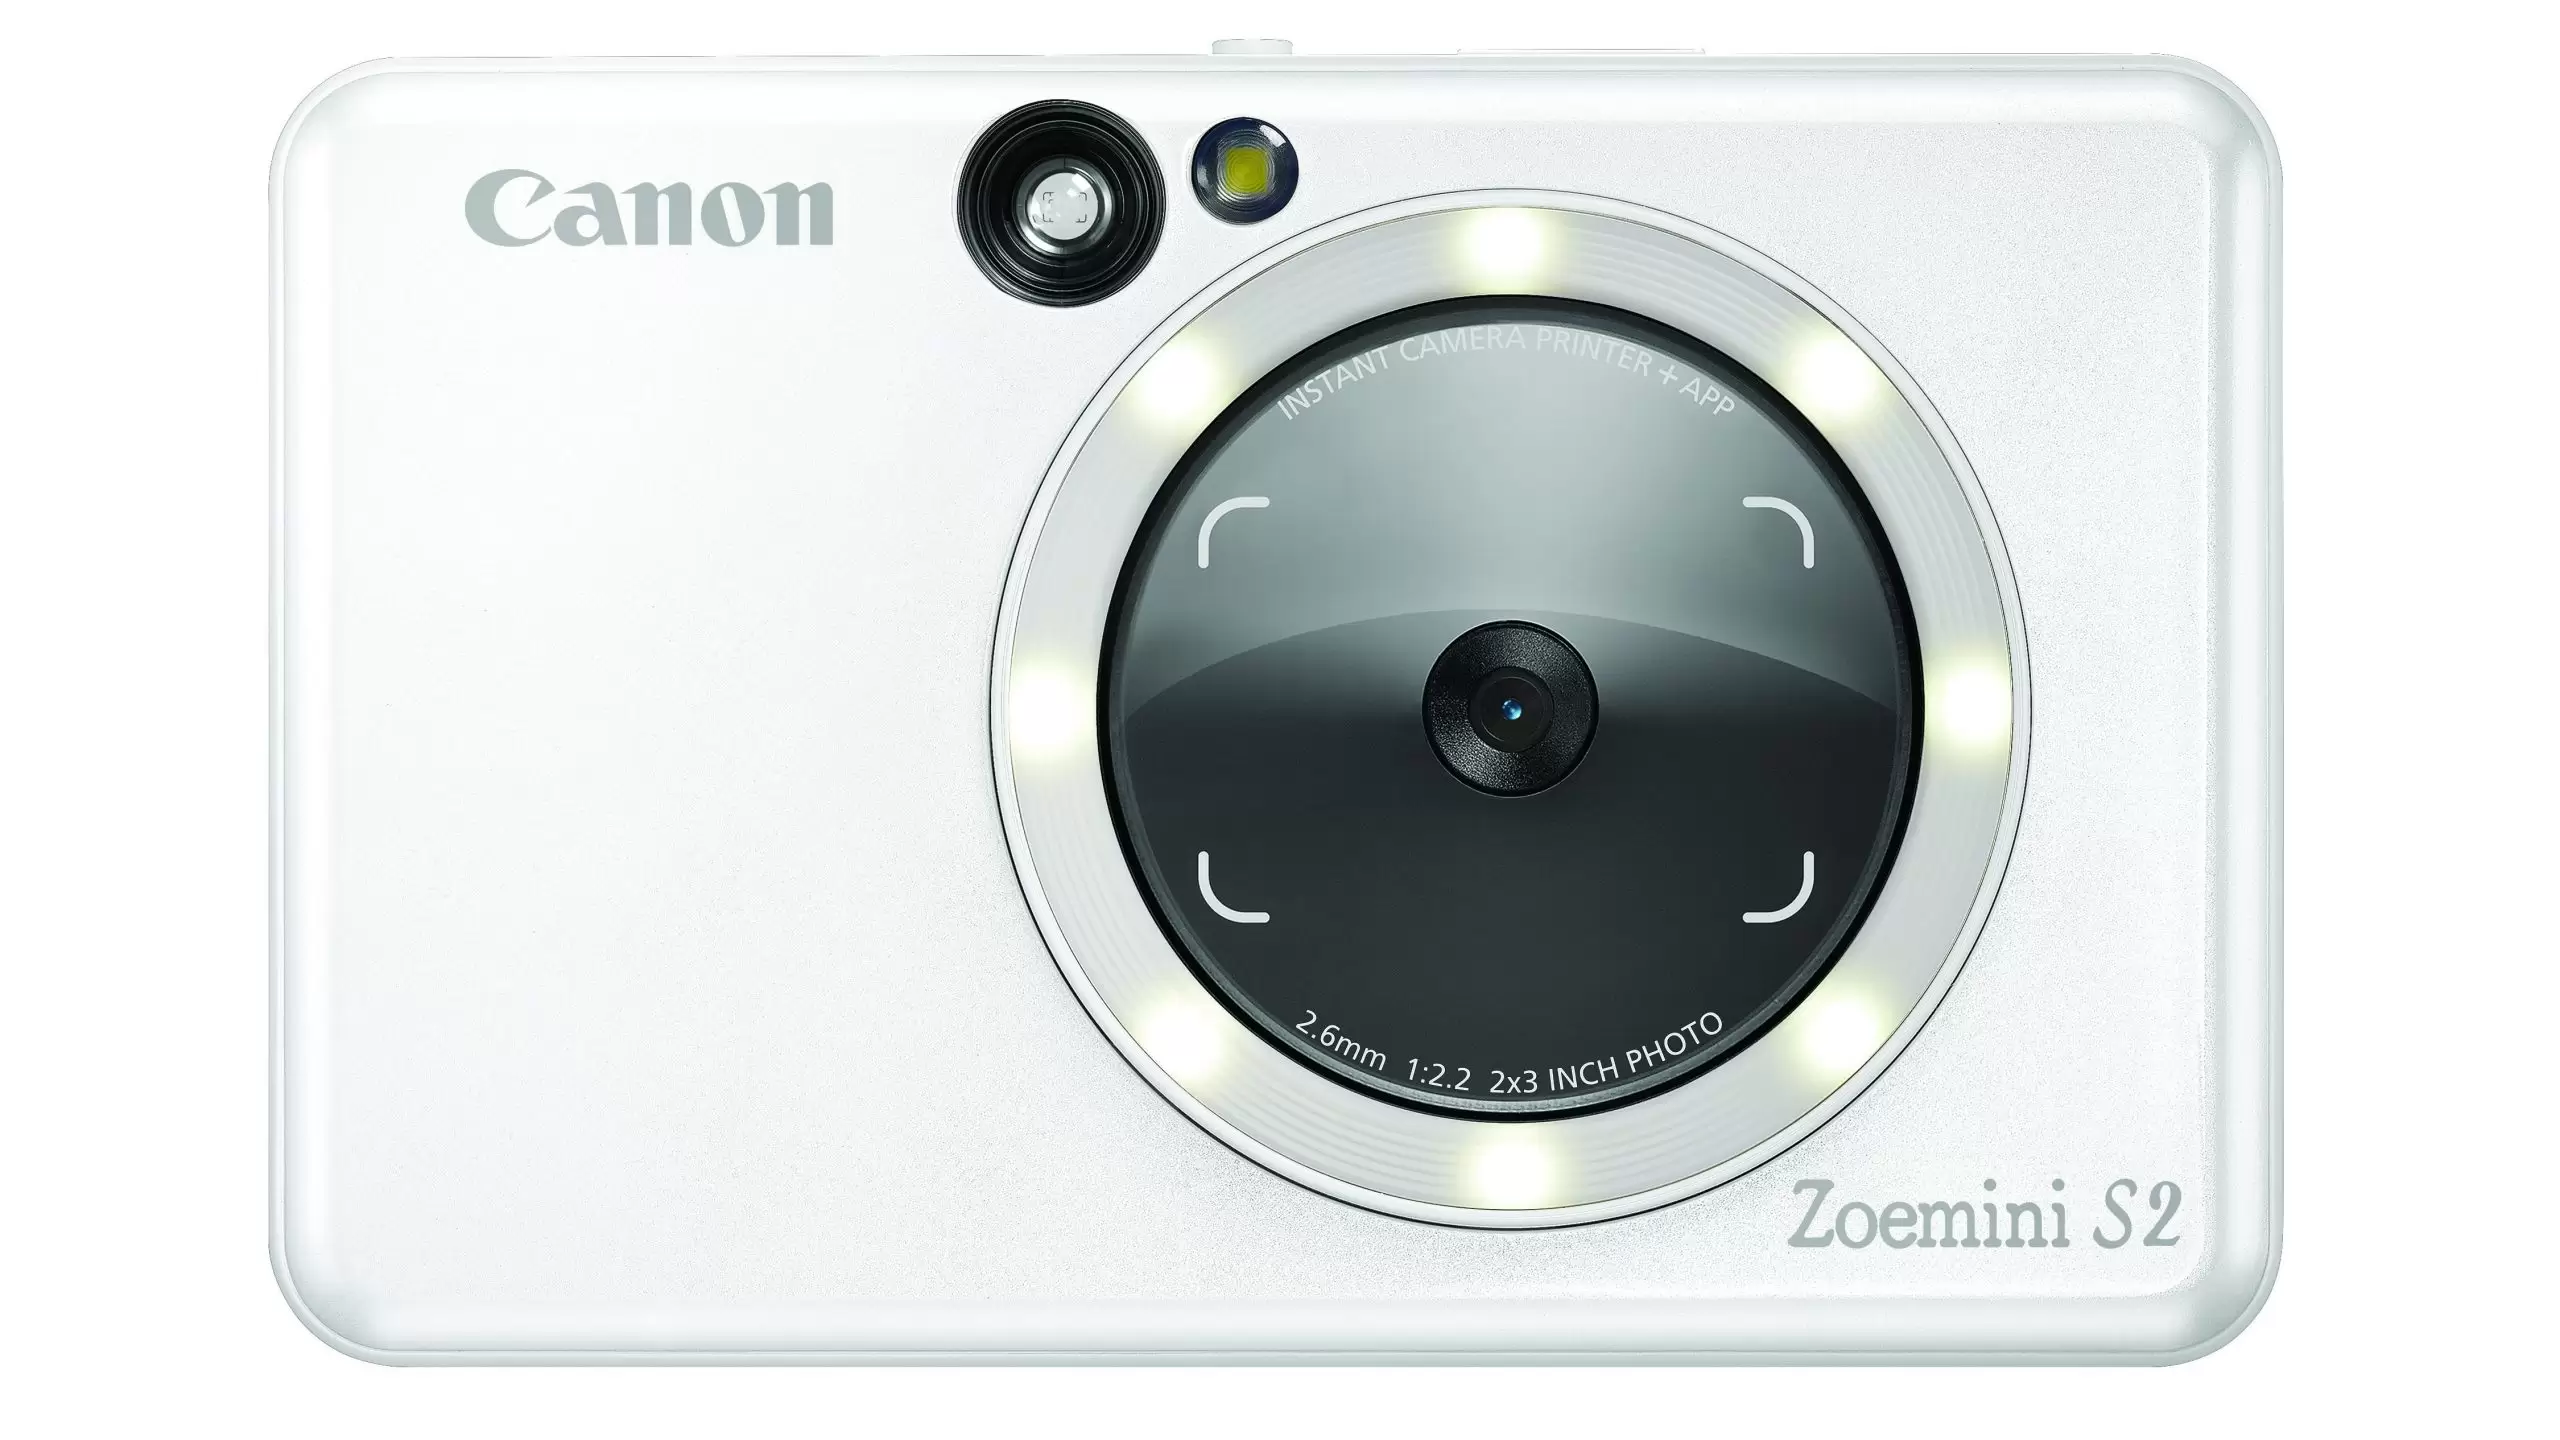 Canon Zoemini S2 beyaz renk
